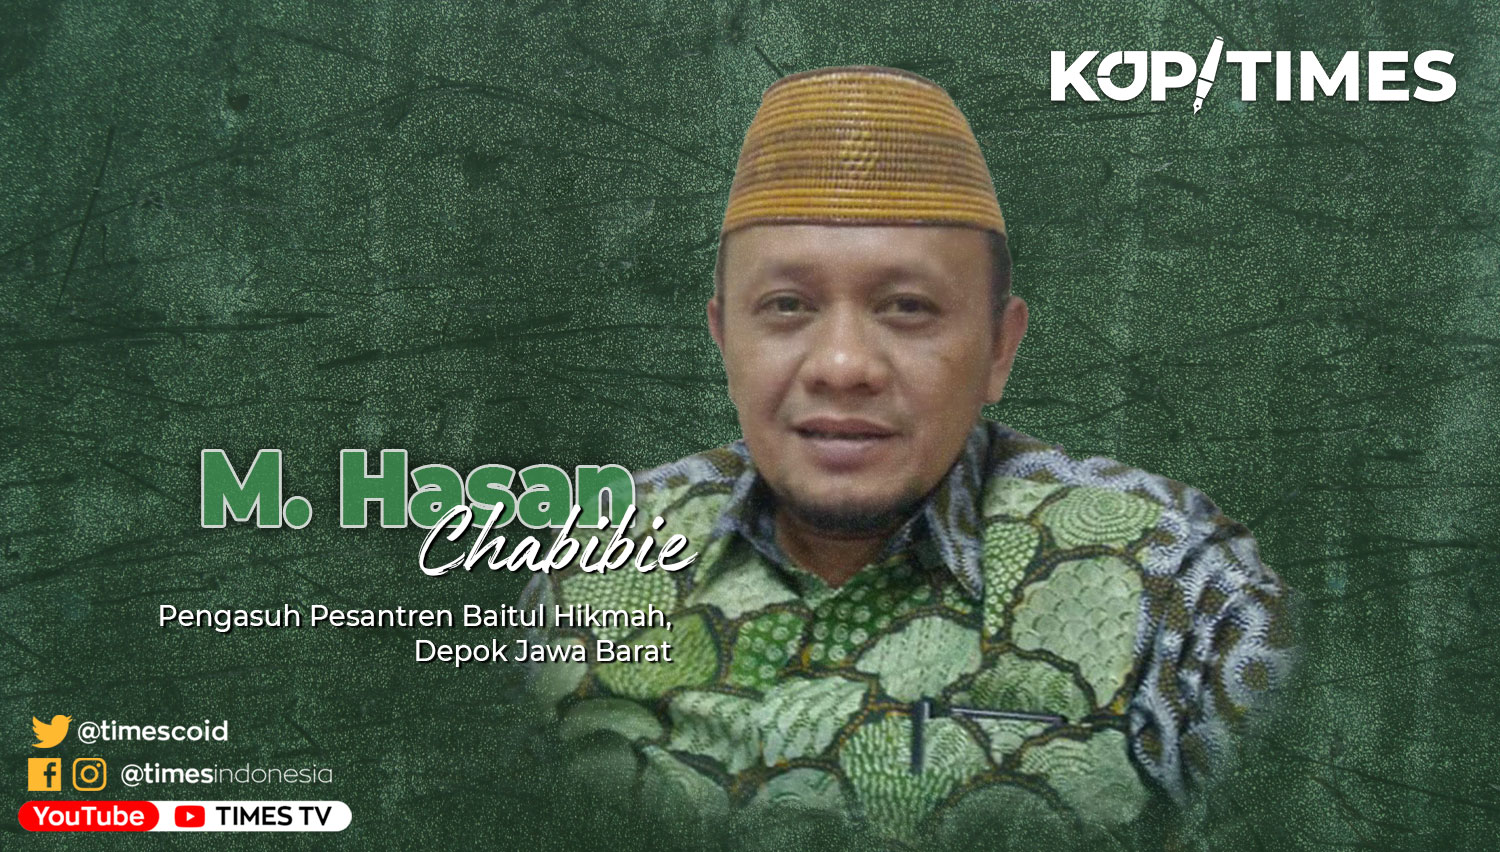 Dr. M. Hasan Chabibie, Pengasuh Pesantren Baitul Hikmah, Depok Jawa Barat